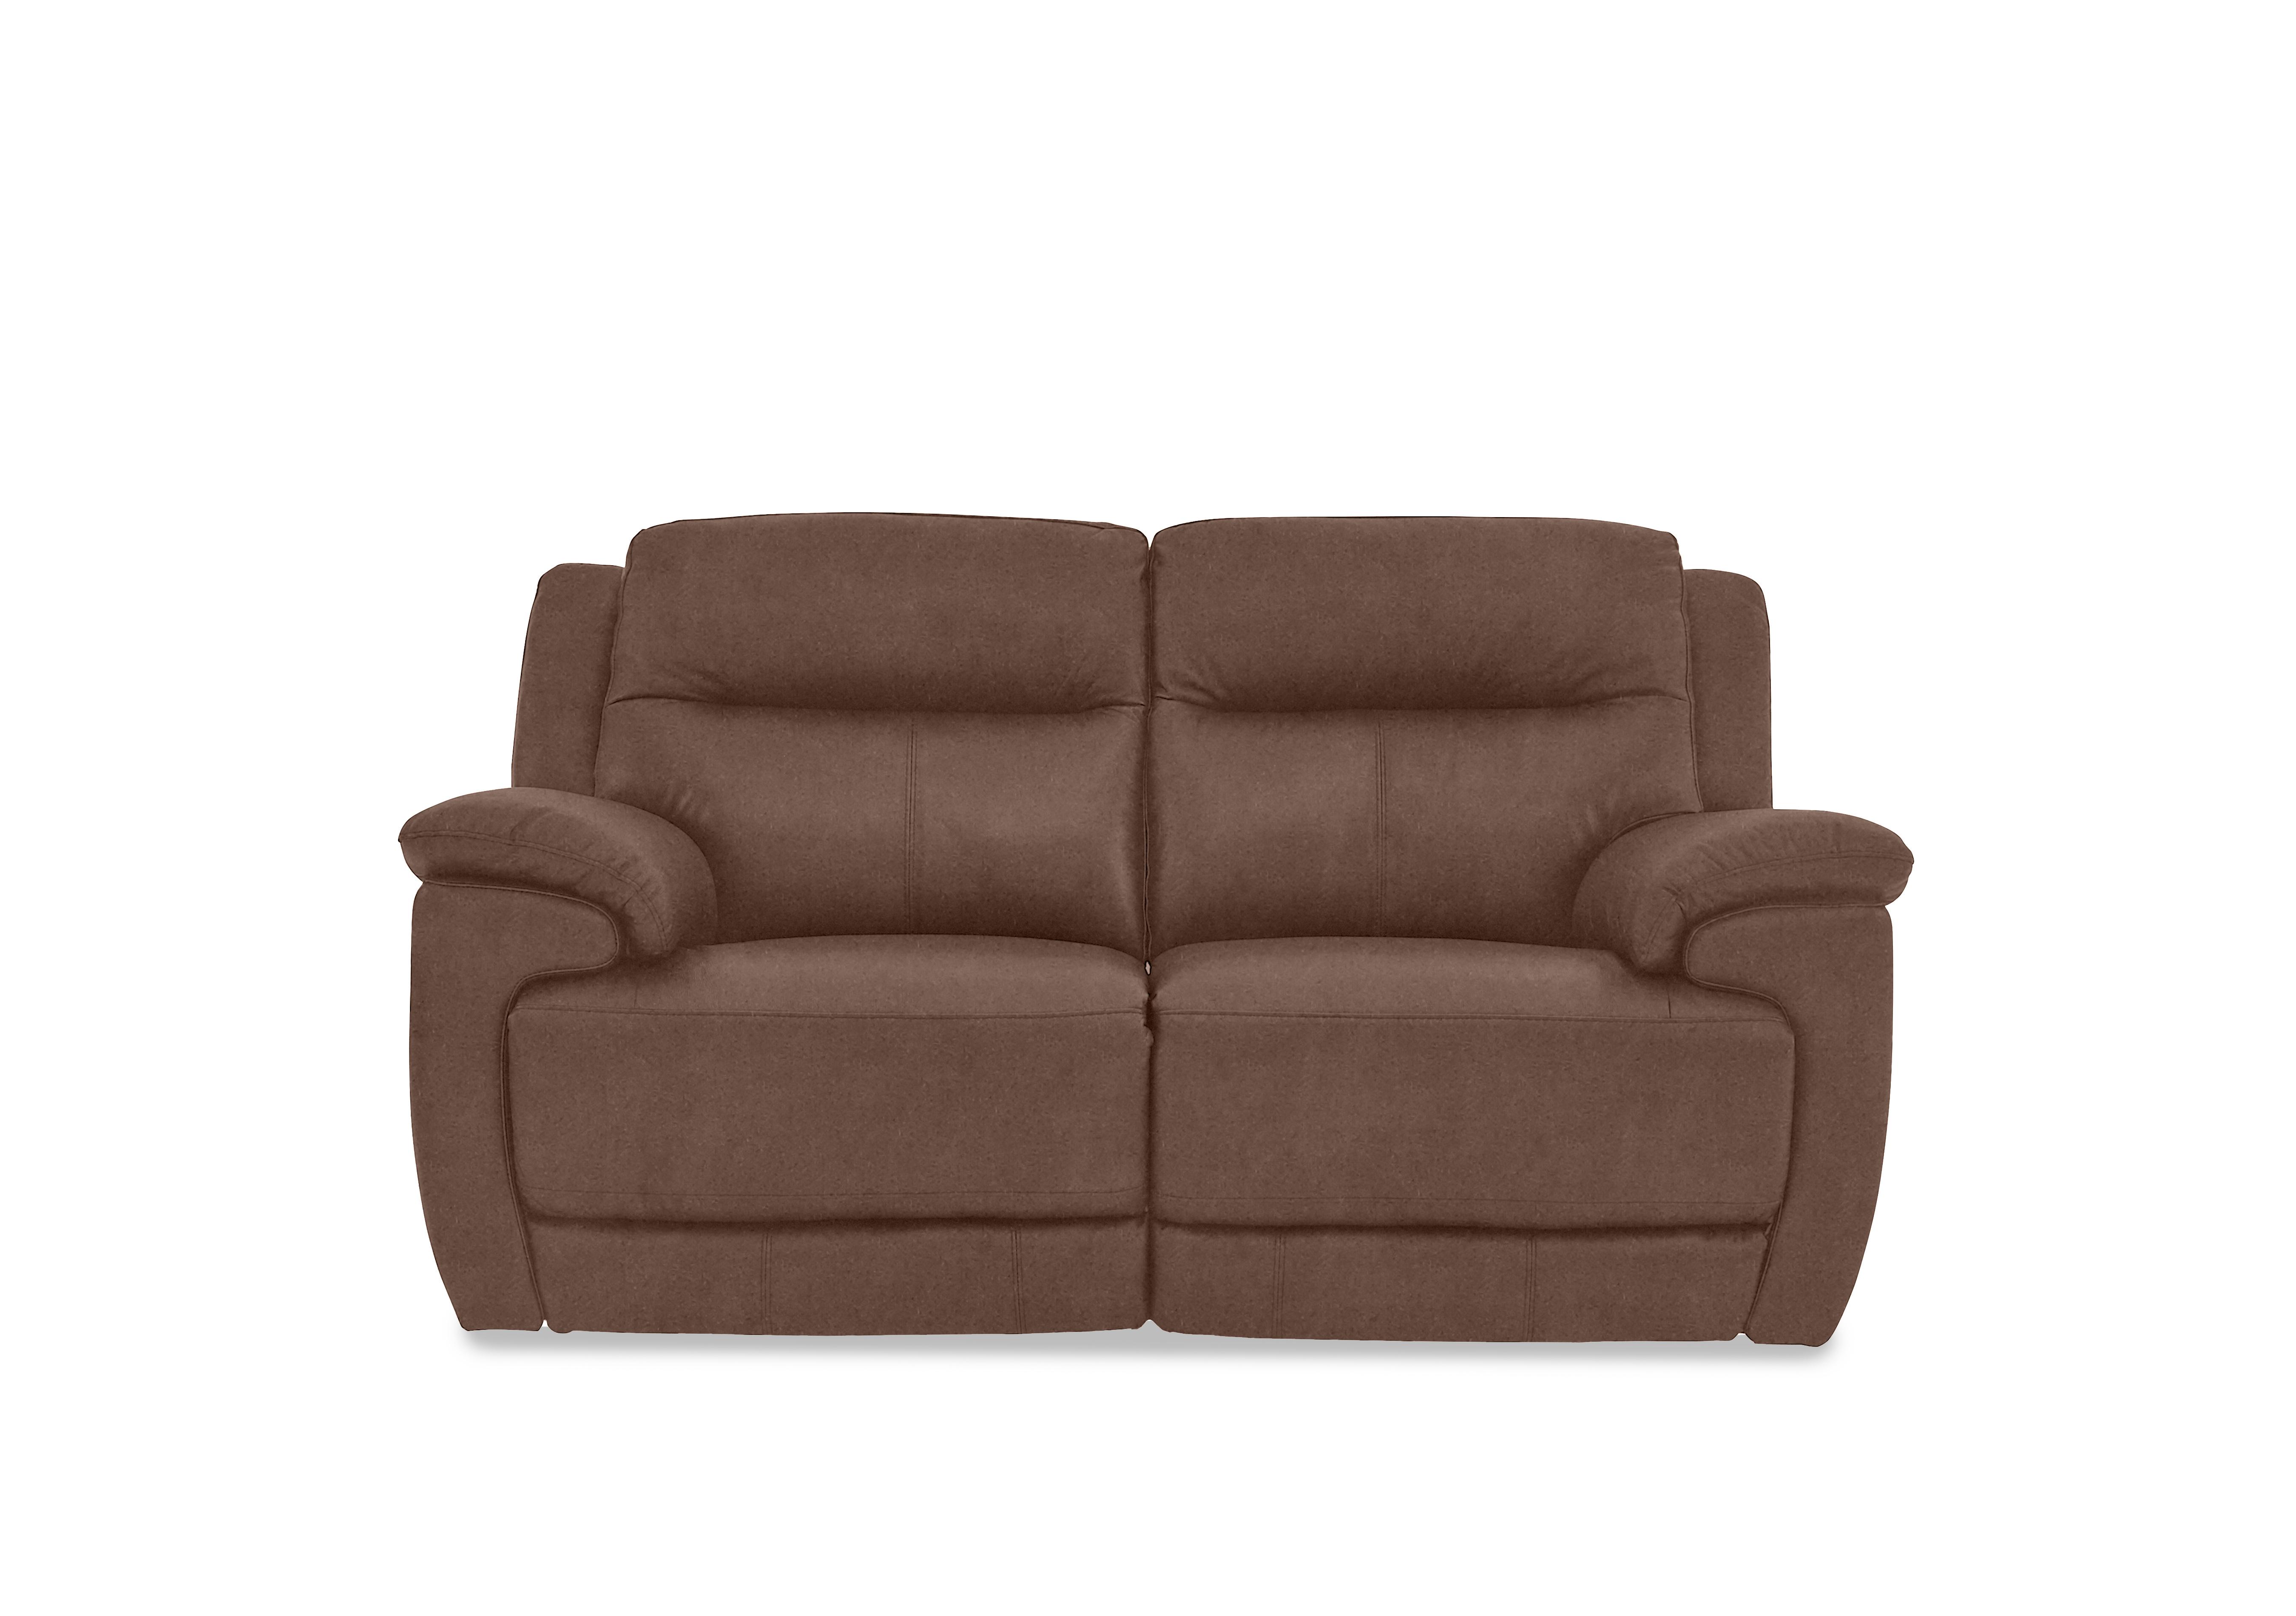 Touch 2 Seater Heavy Duty Fabric Sofa in Bfa-Blj-R05 Hazelnut on Furniture Village